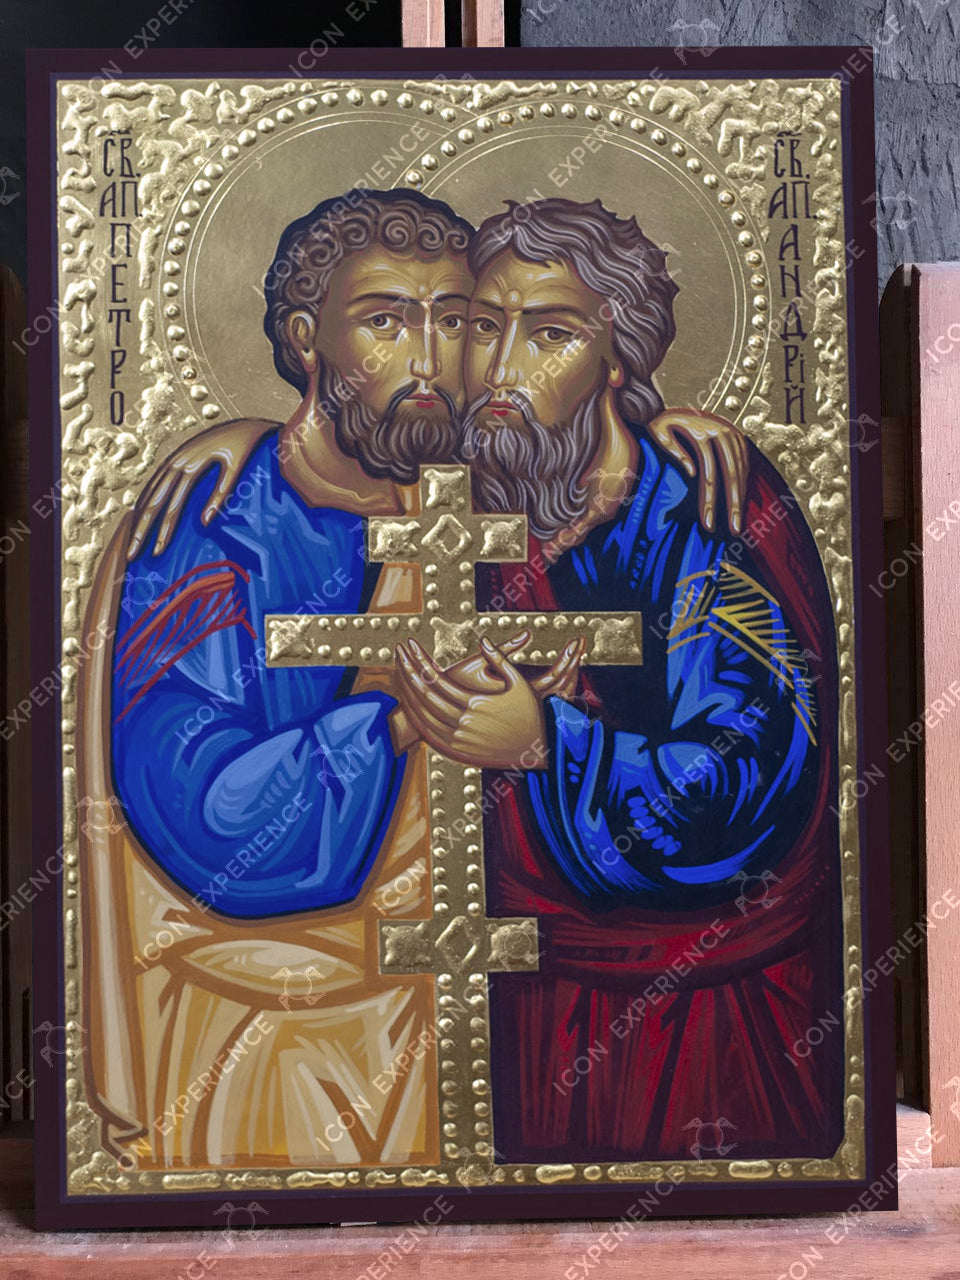 Saint Peter and Saint Andrew Apostles